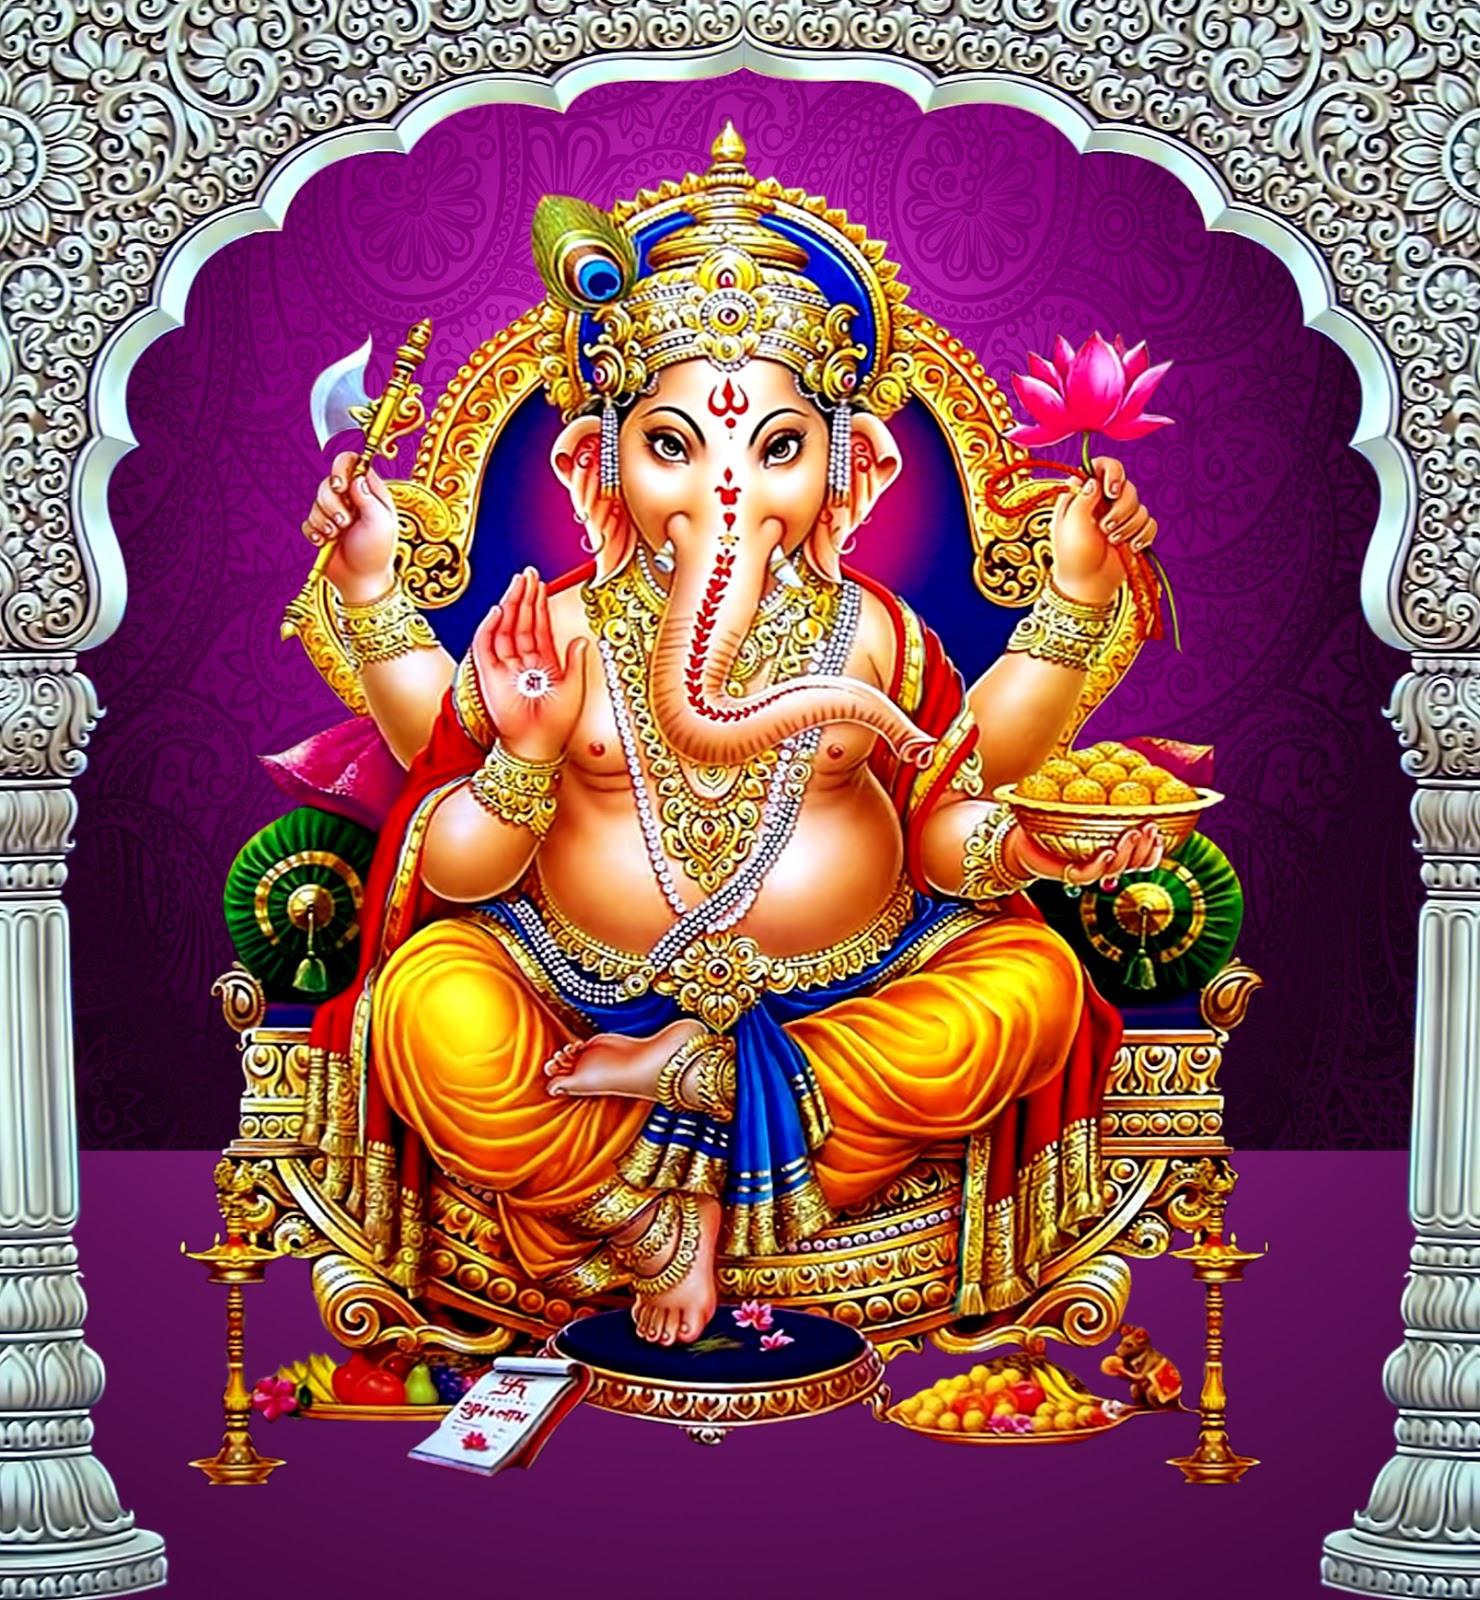 Lord ganesha HD images free download for vinayaka chavithi | naveengfx